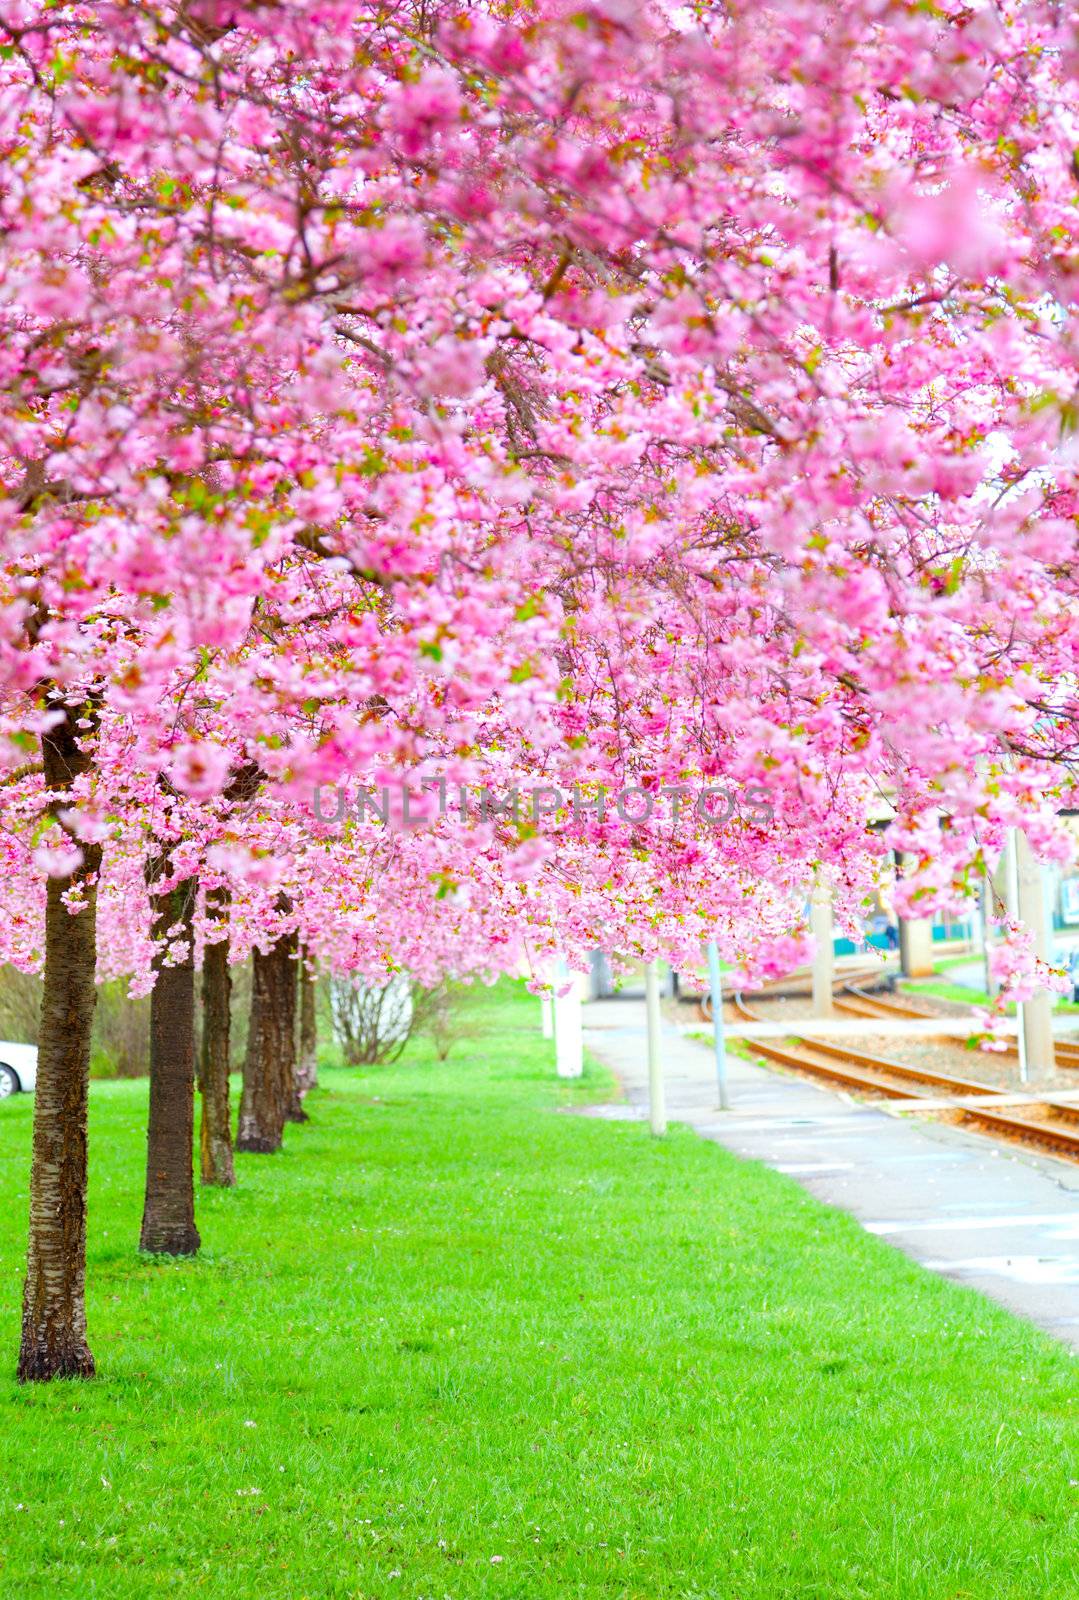 
blossoming tree in spring on green grass (Sakura tree pink flow by motorolka